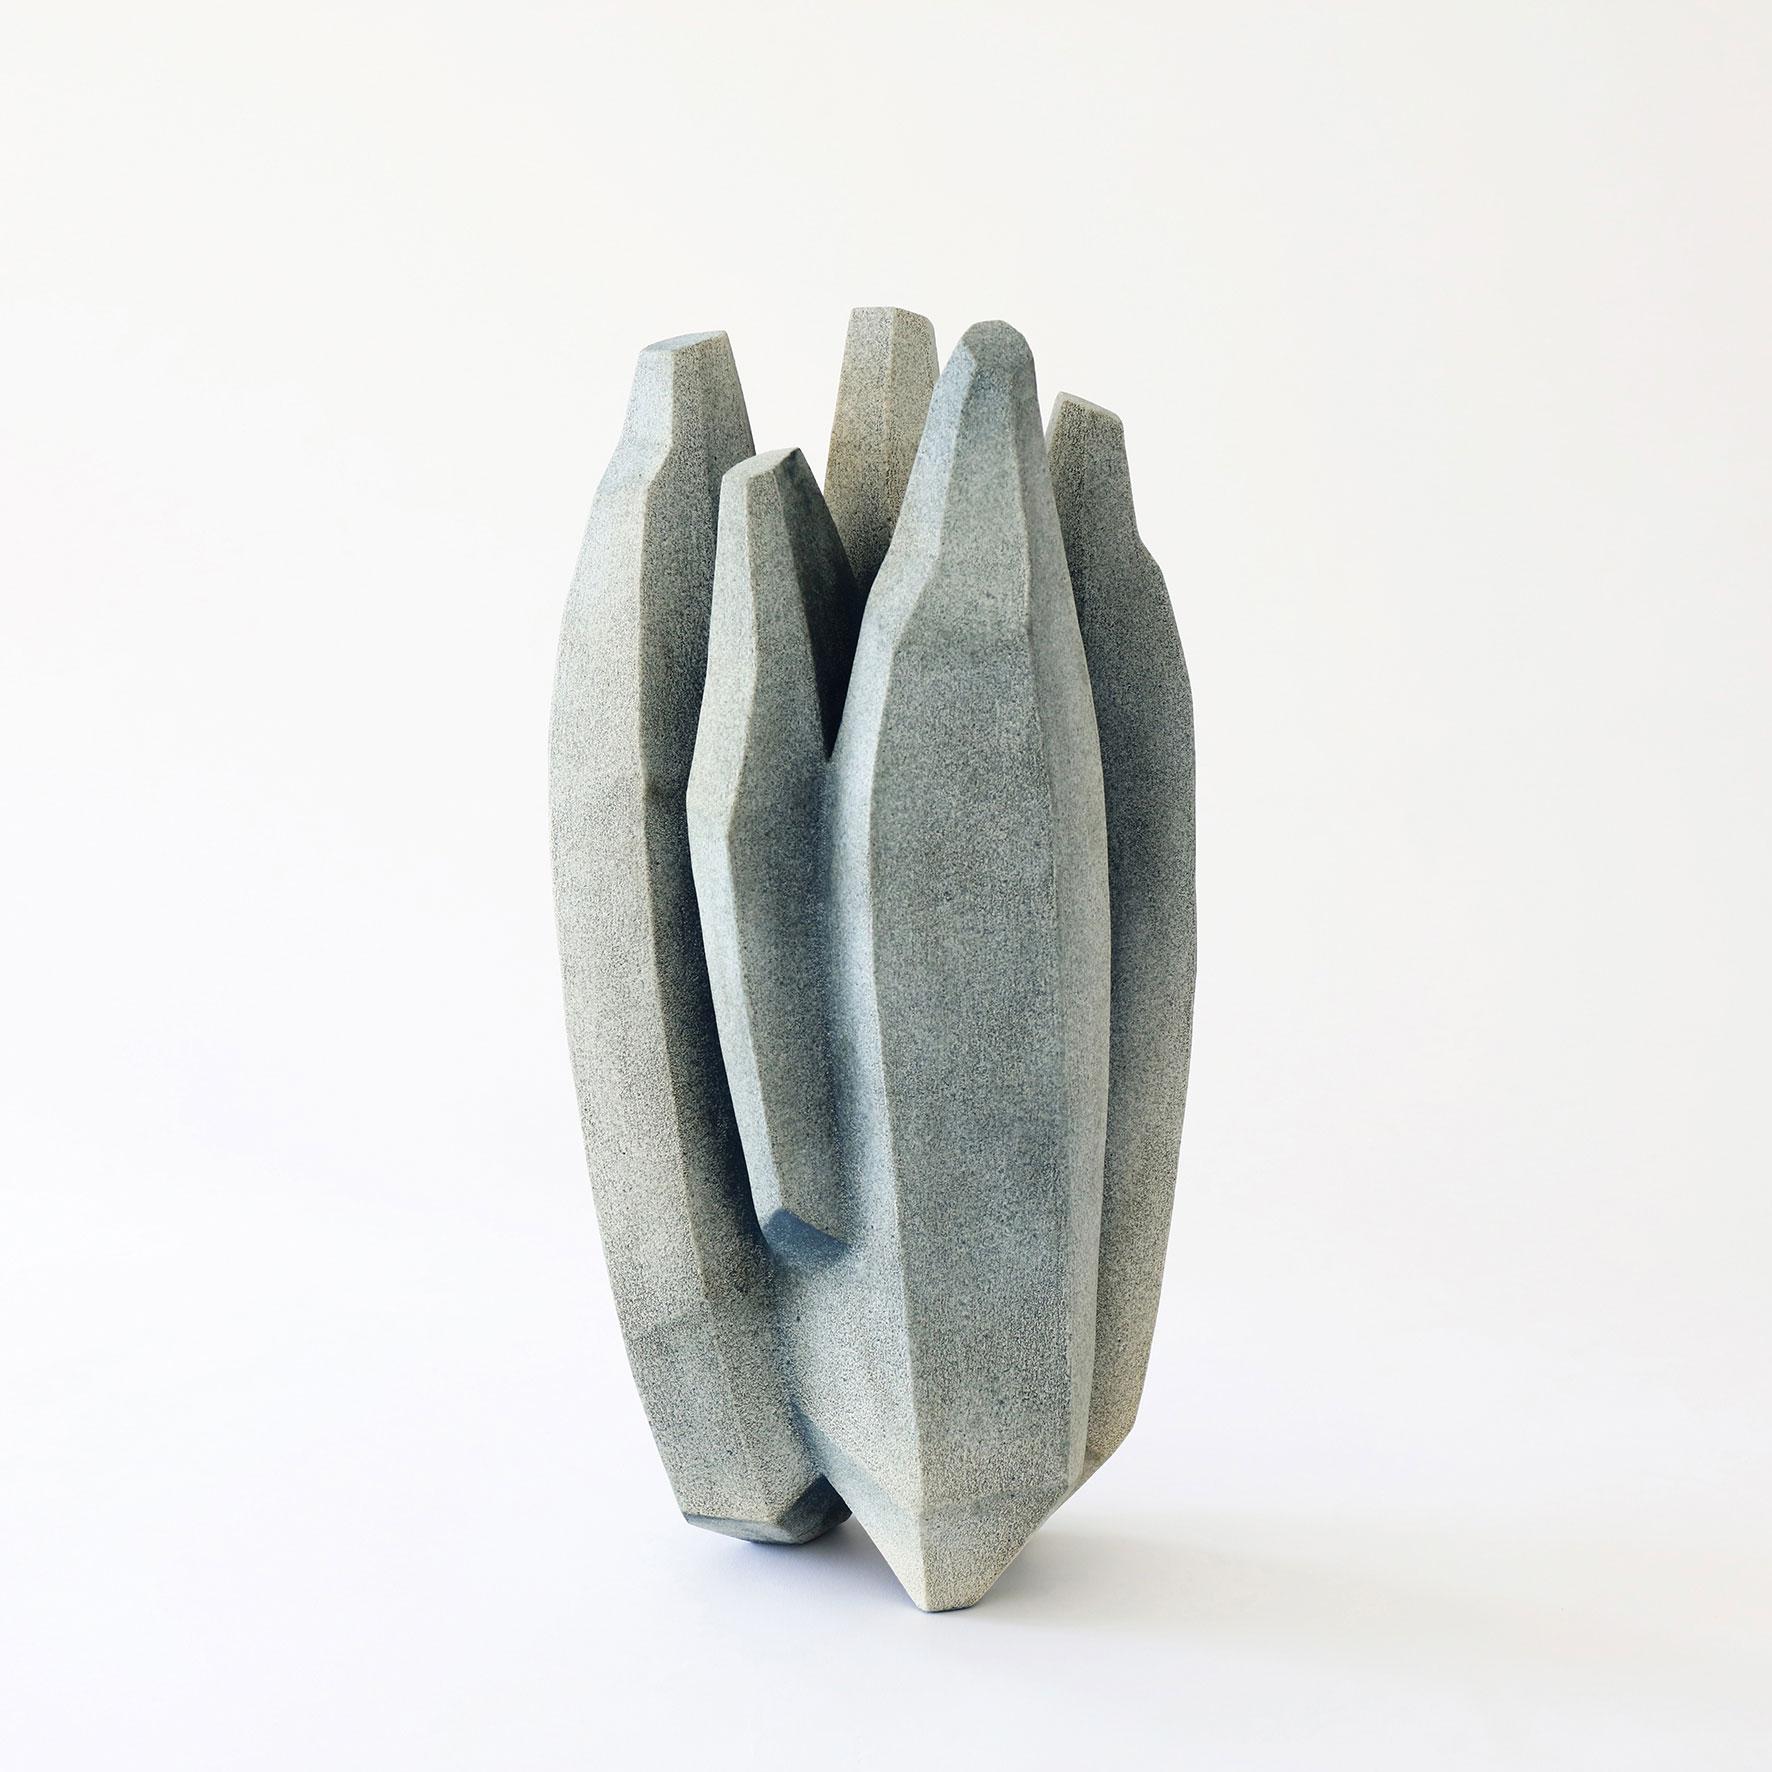 Hand-Crafted Contemporary Ceramic Sculptures by Turi Heisselberg Pedersen